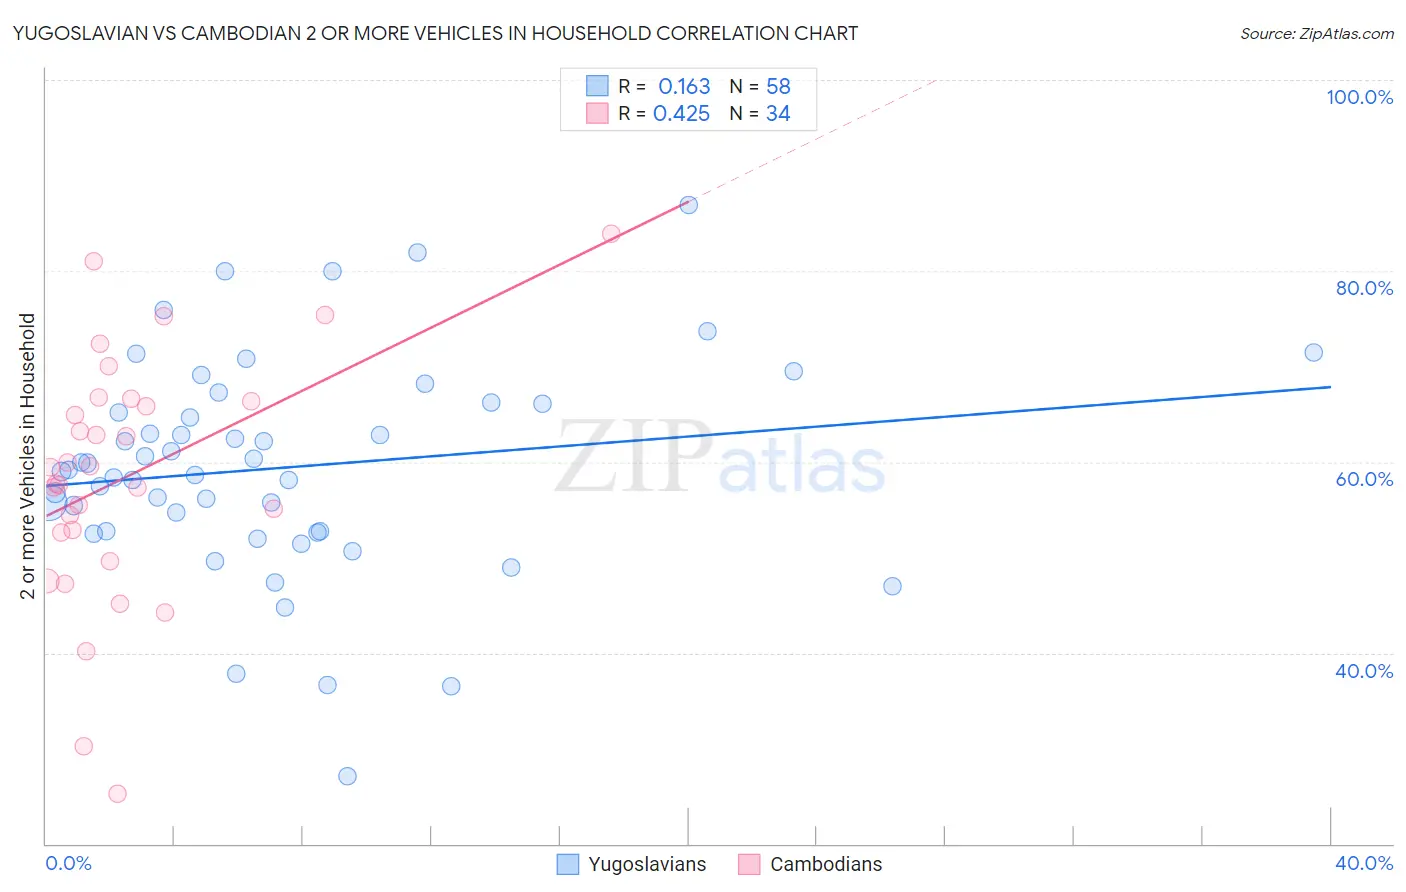 Yugoslavian vs Cambodian 2 or more Vehicles in Household